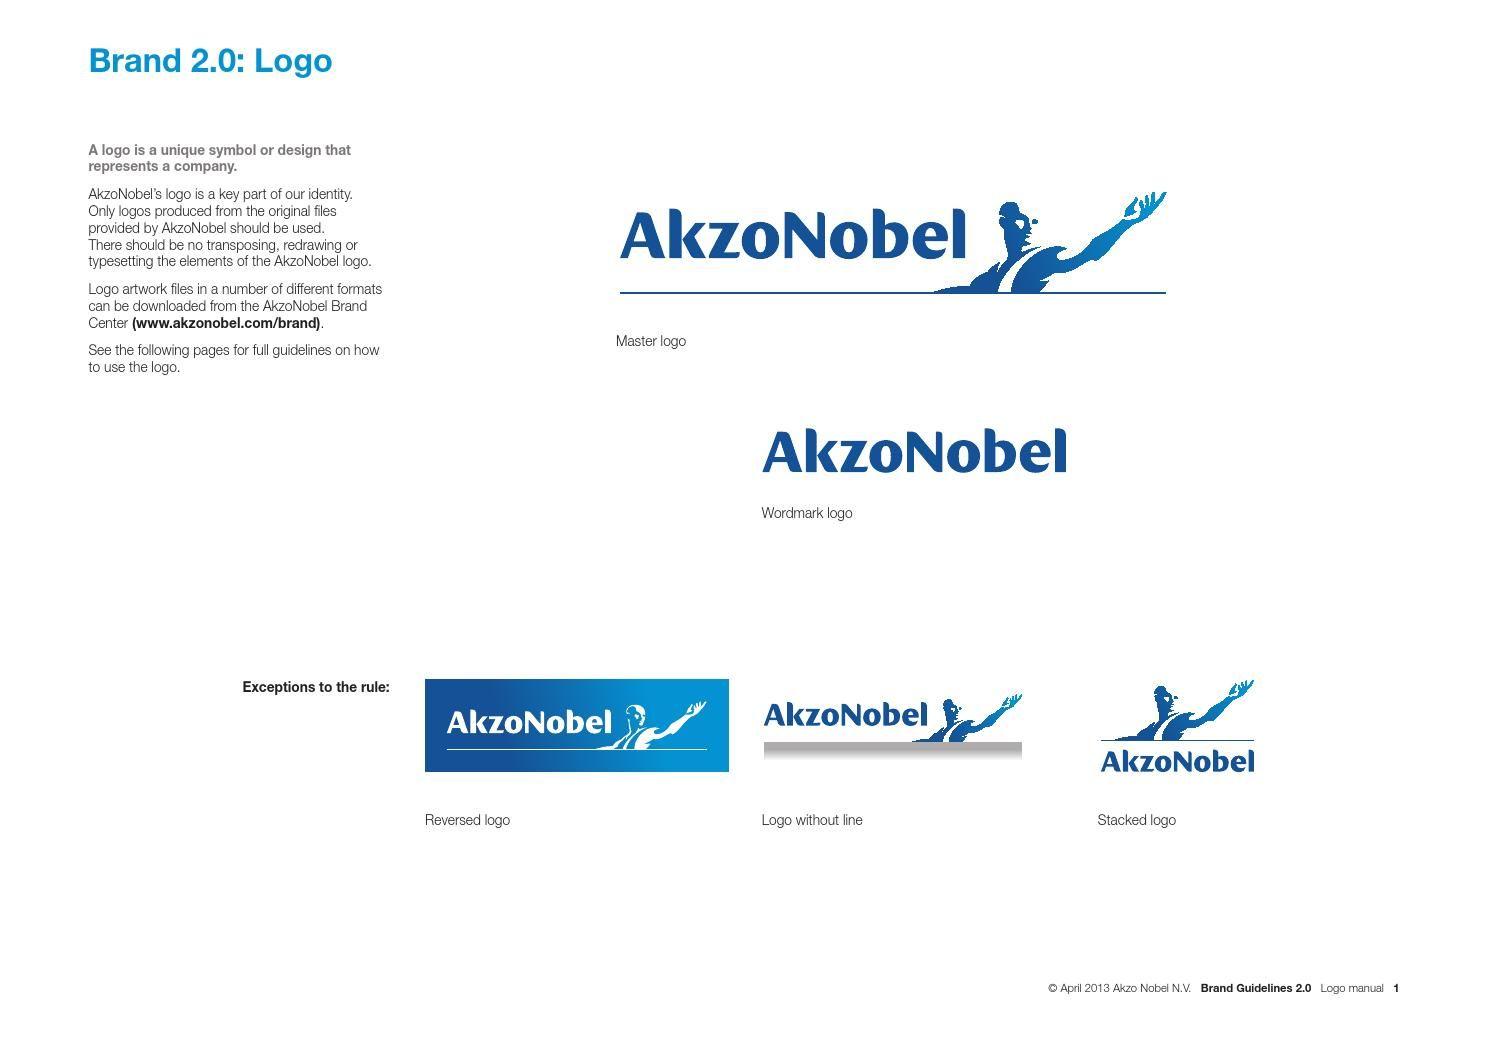 Akzonobel Logo - Akzonobel logo manual 2013 by Bourne Design - issuu